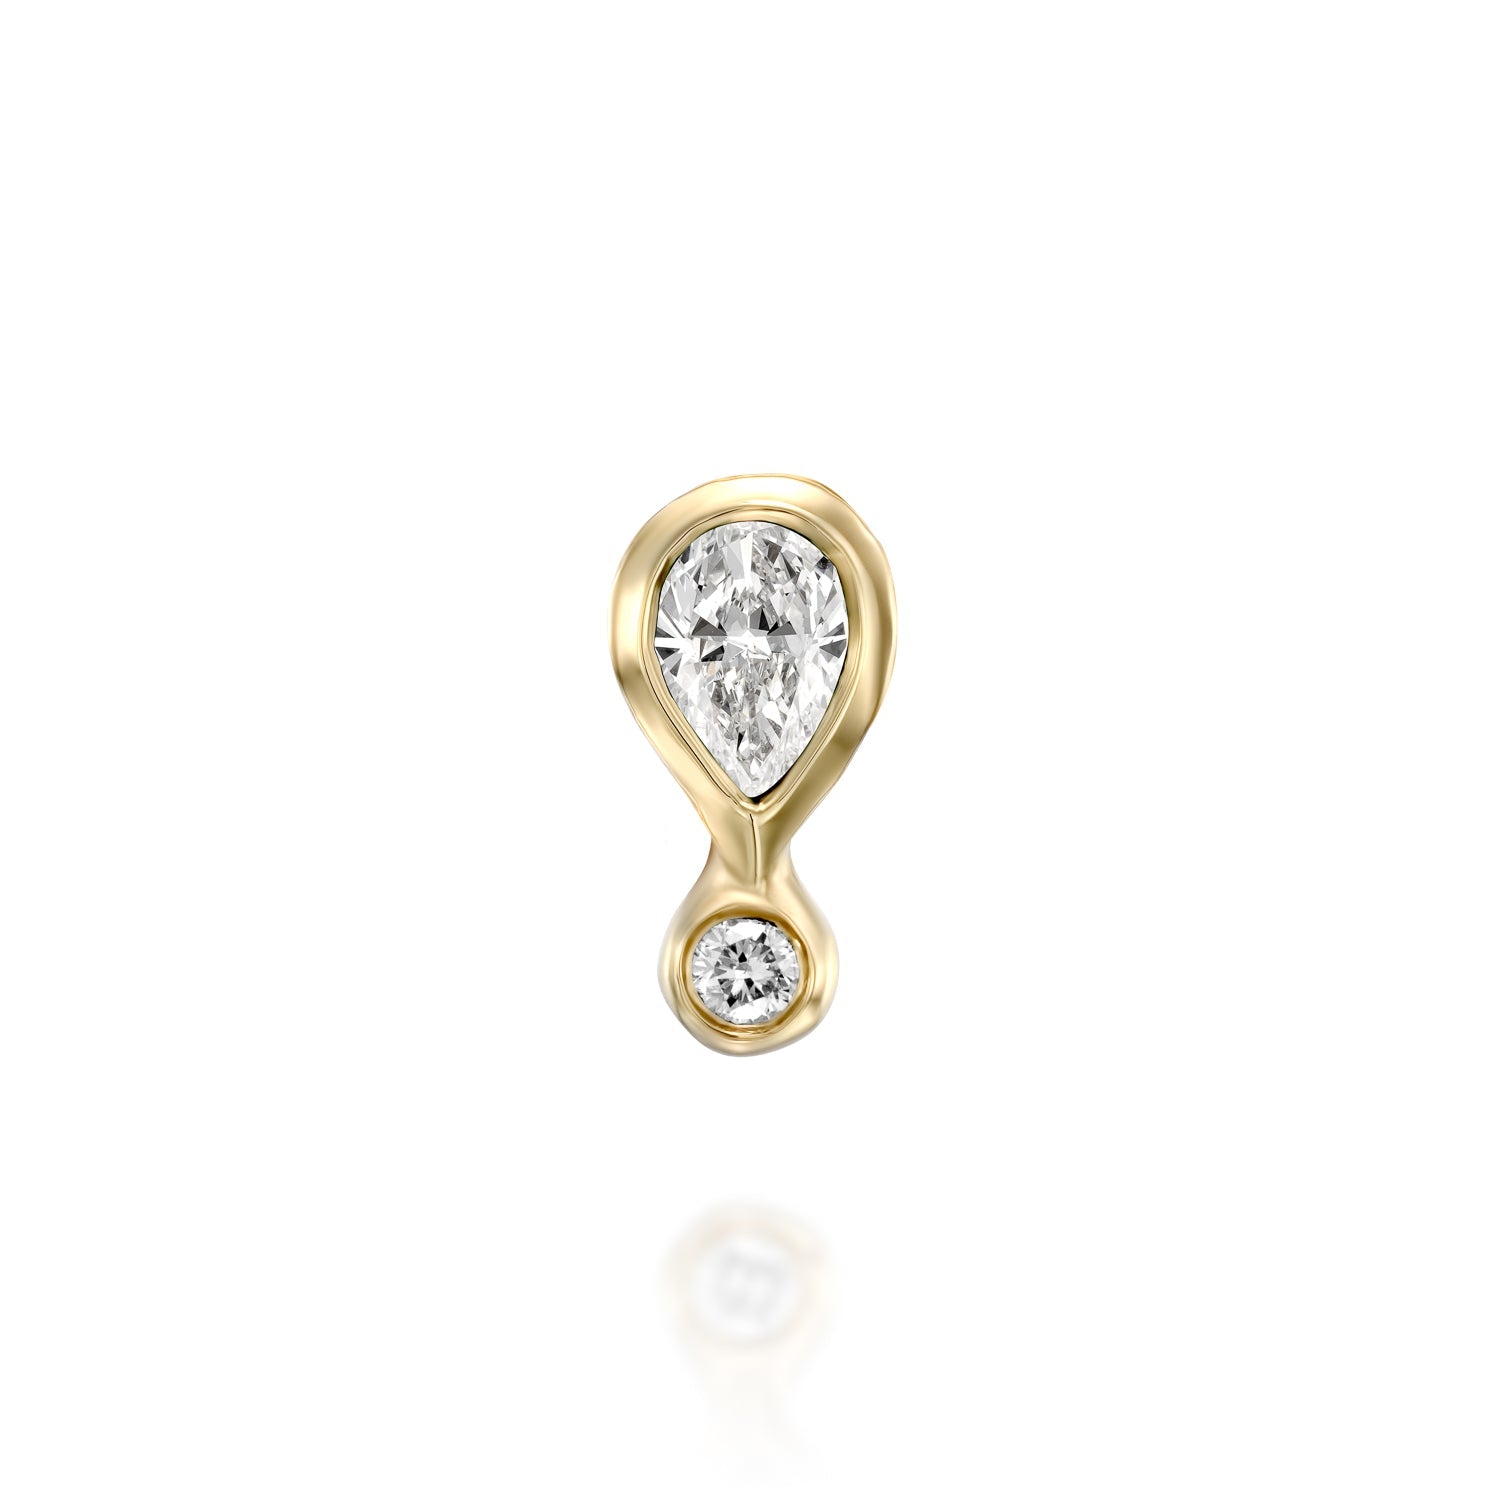 Jolene earring - Diamonds